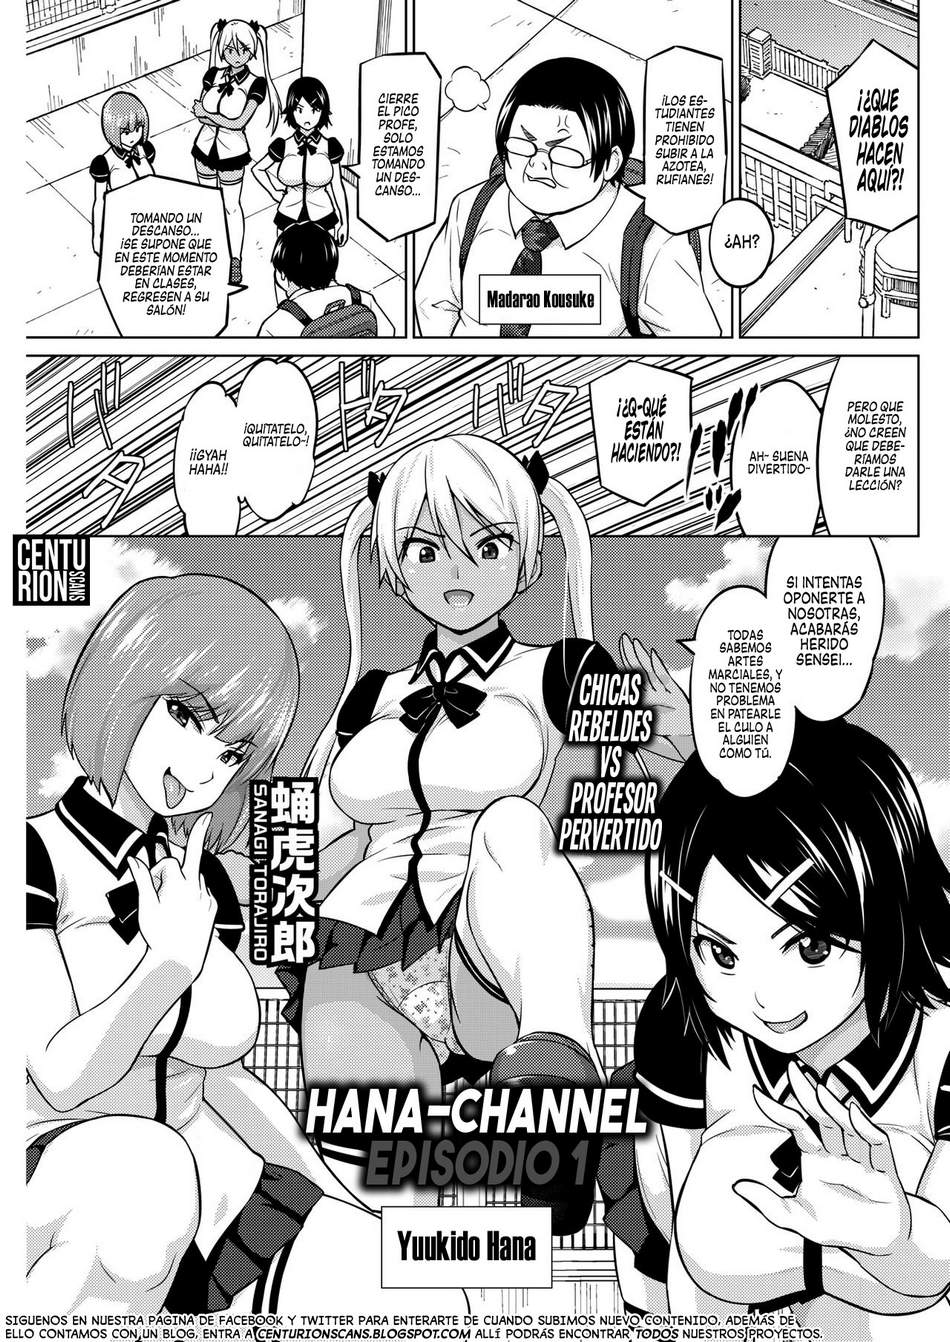 Hana-Channel #1 - Page #1